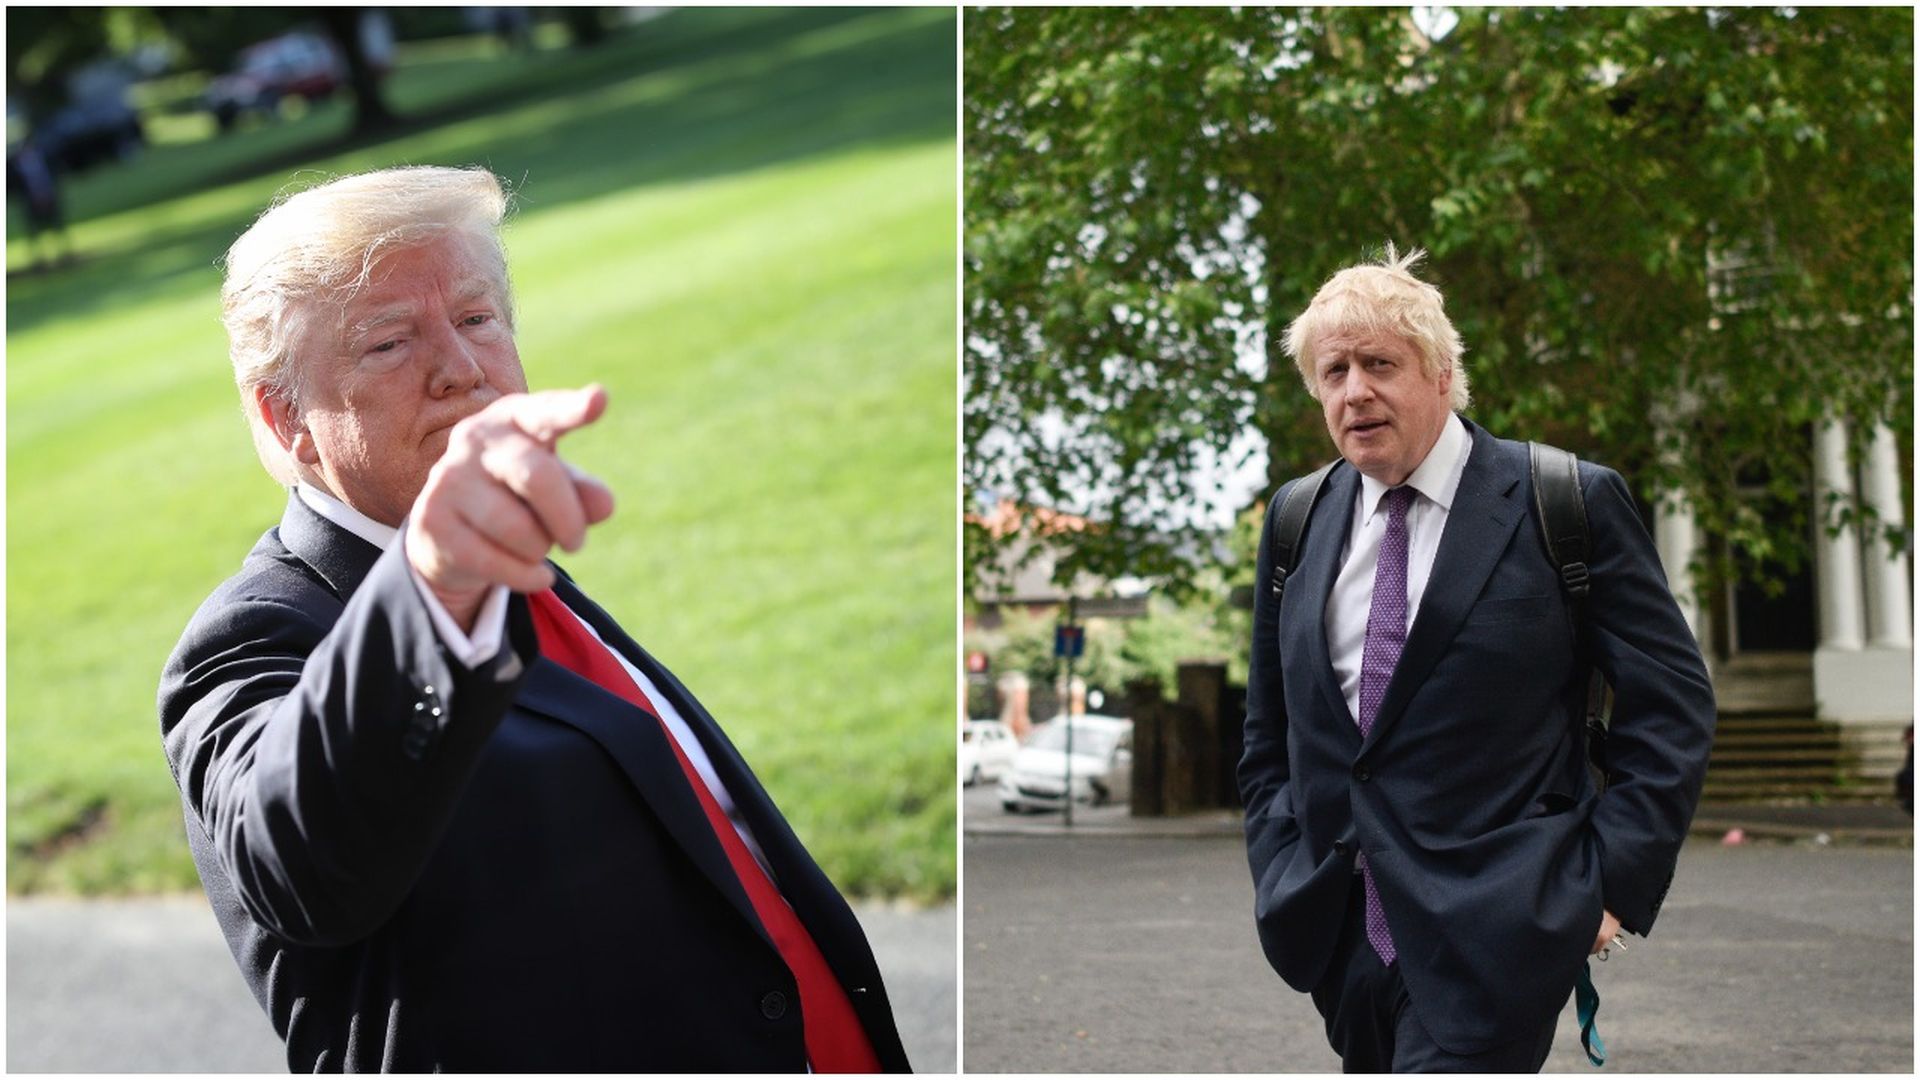 This image a split screen between Trump and Boris Johnson.